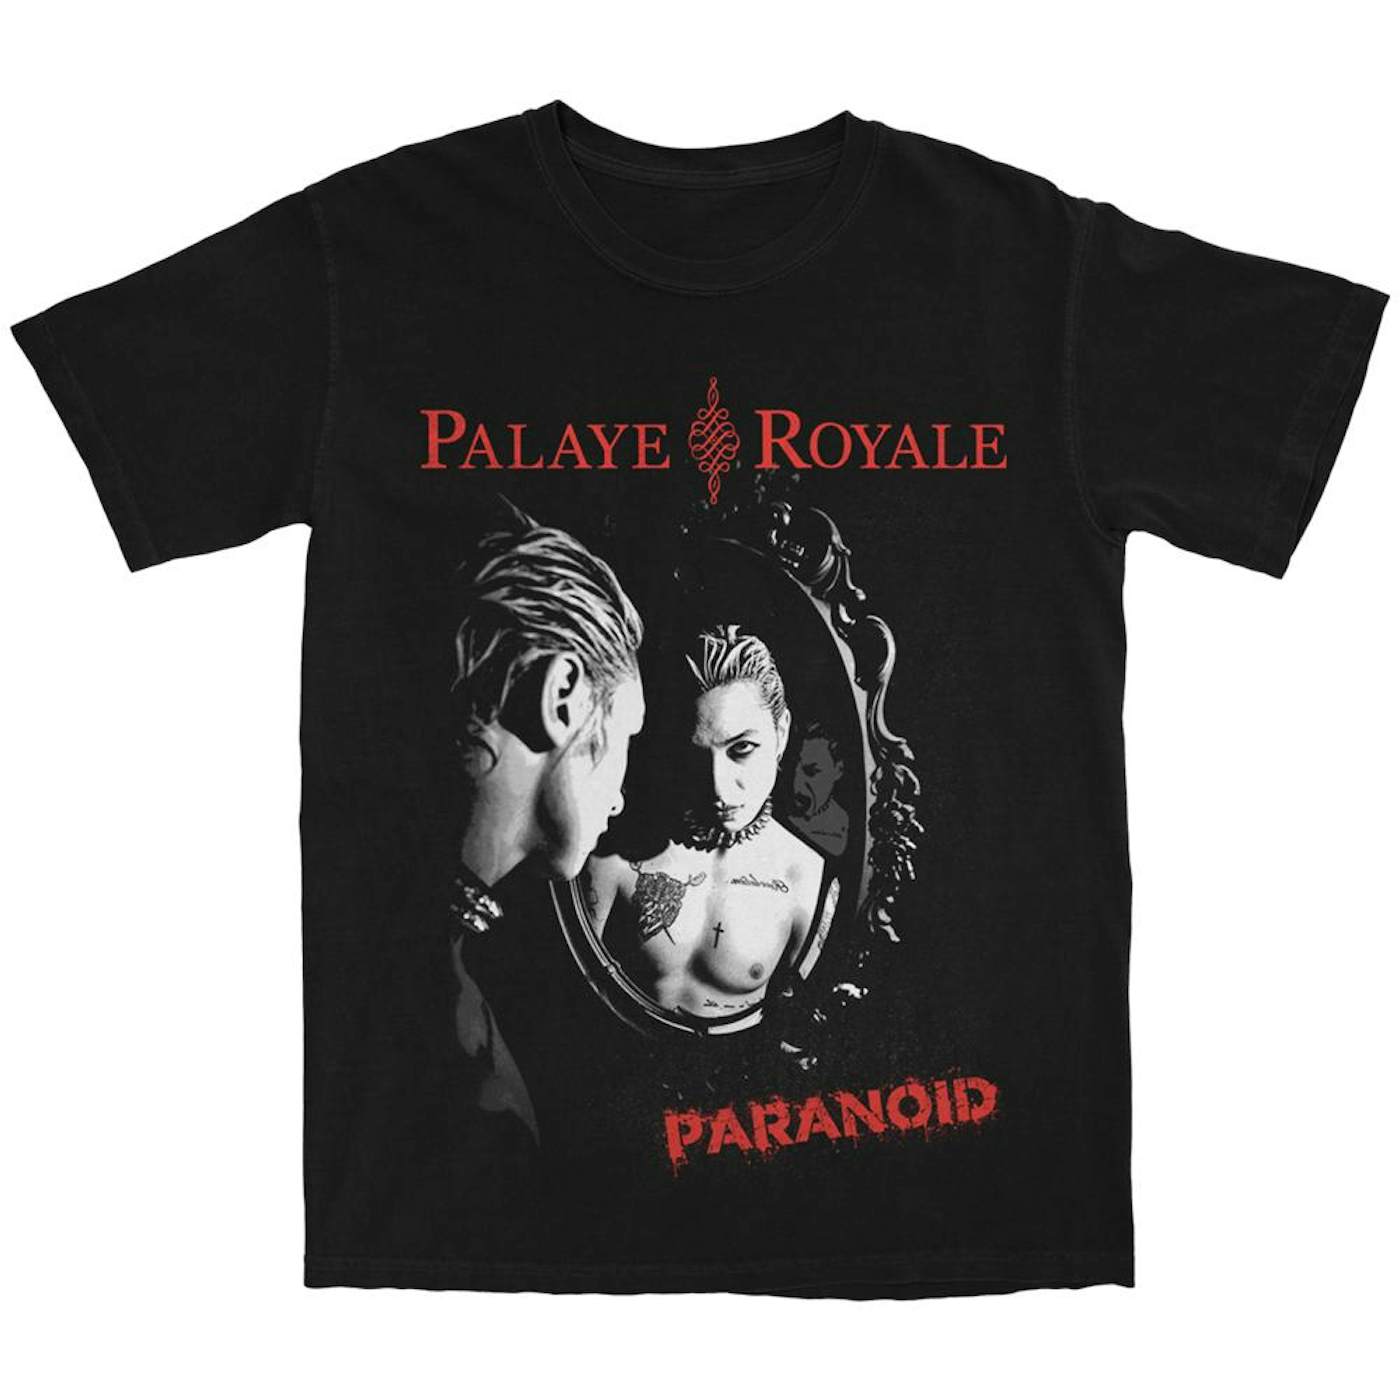 Palaye Royale - "Paranoid" Tee